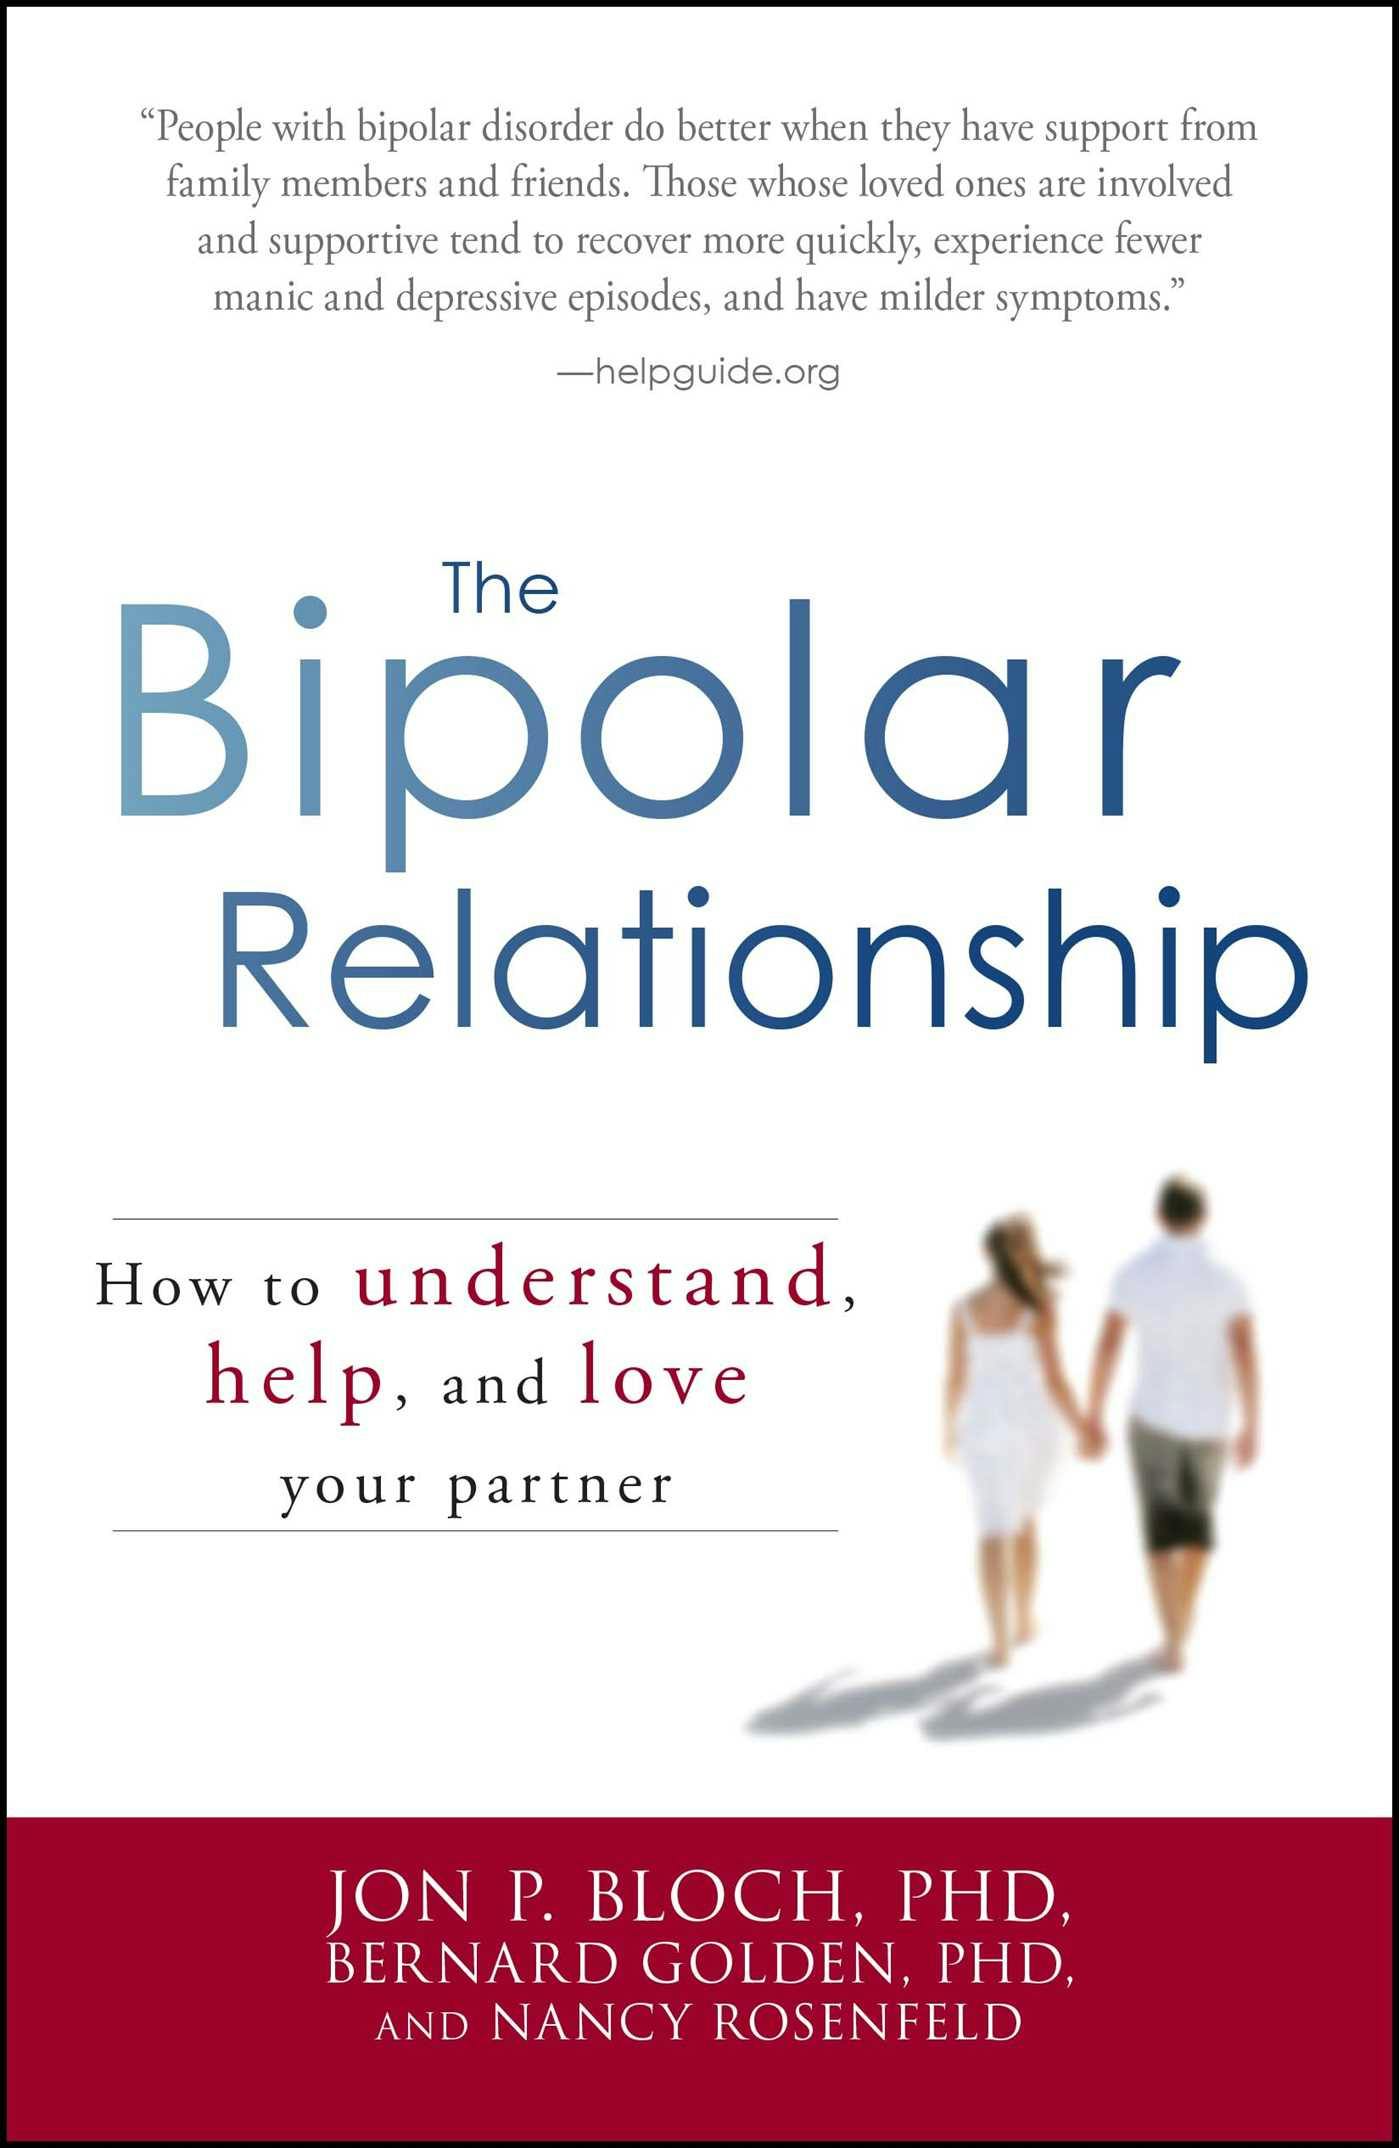 The Bipolar Relationship: How to understand, help, and love your partner - Jon P Bloch, Bernard Golden, Nancy Rosenfeld